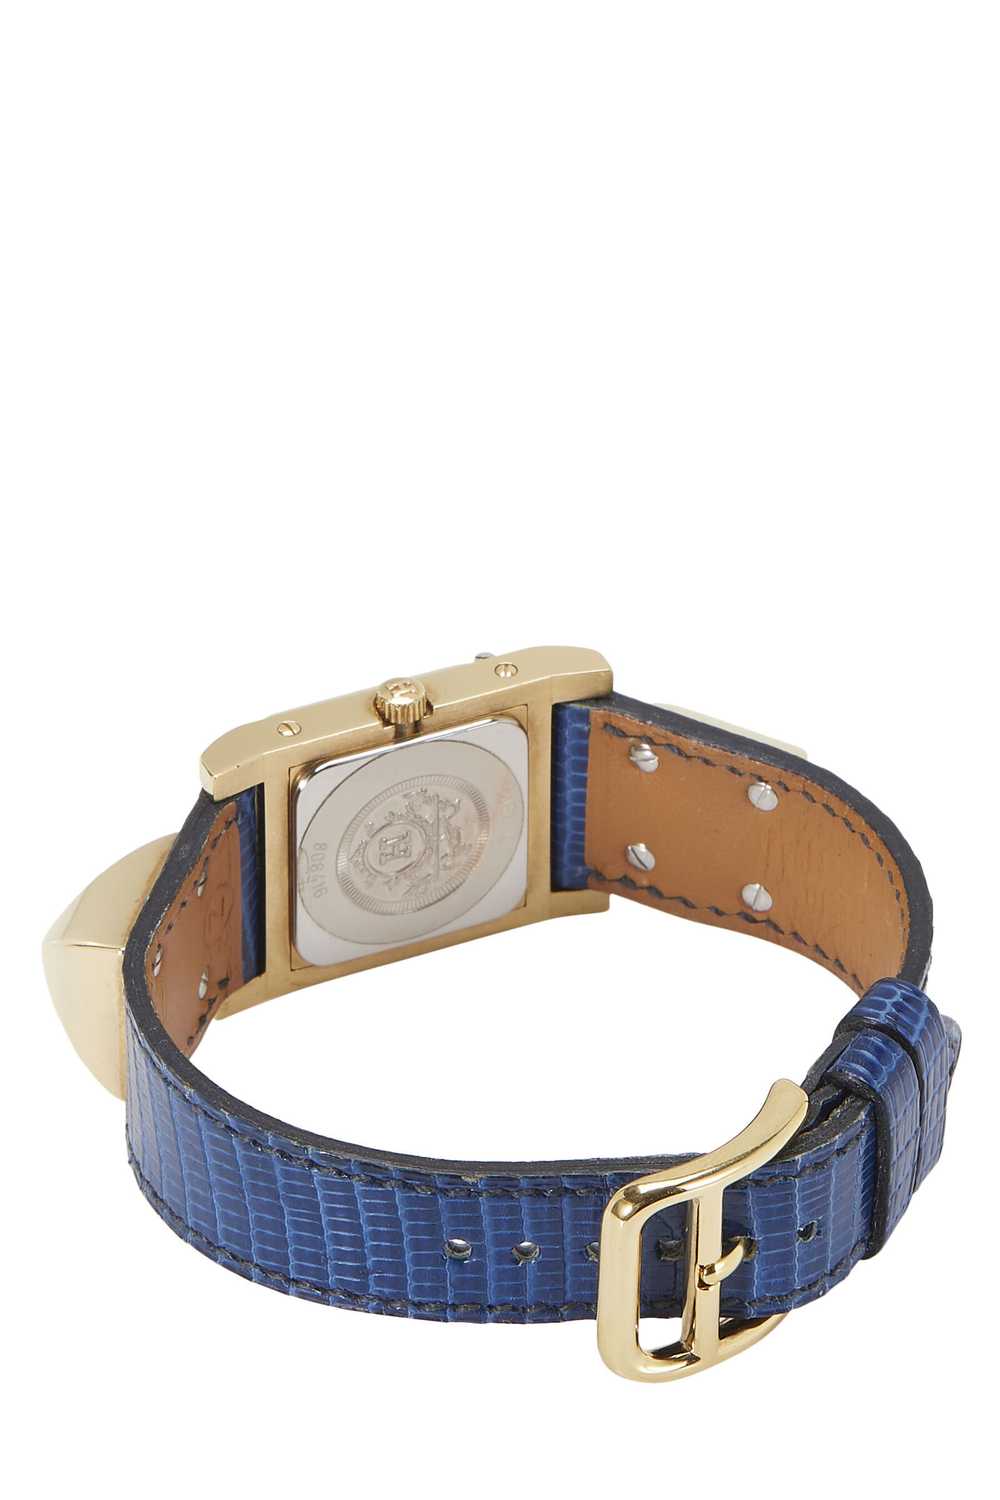 Gold & Blue Leather Medor Watch - image 3